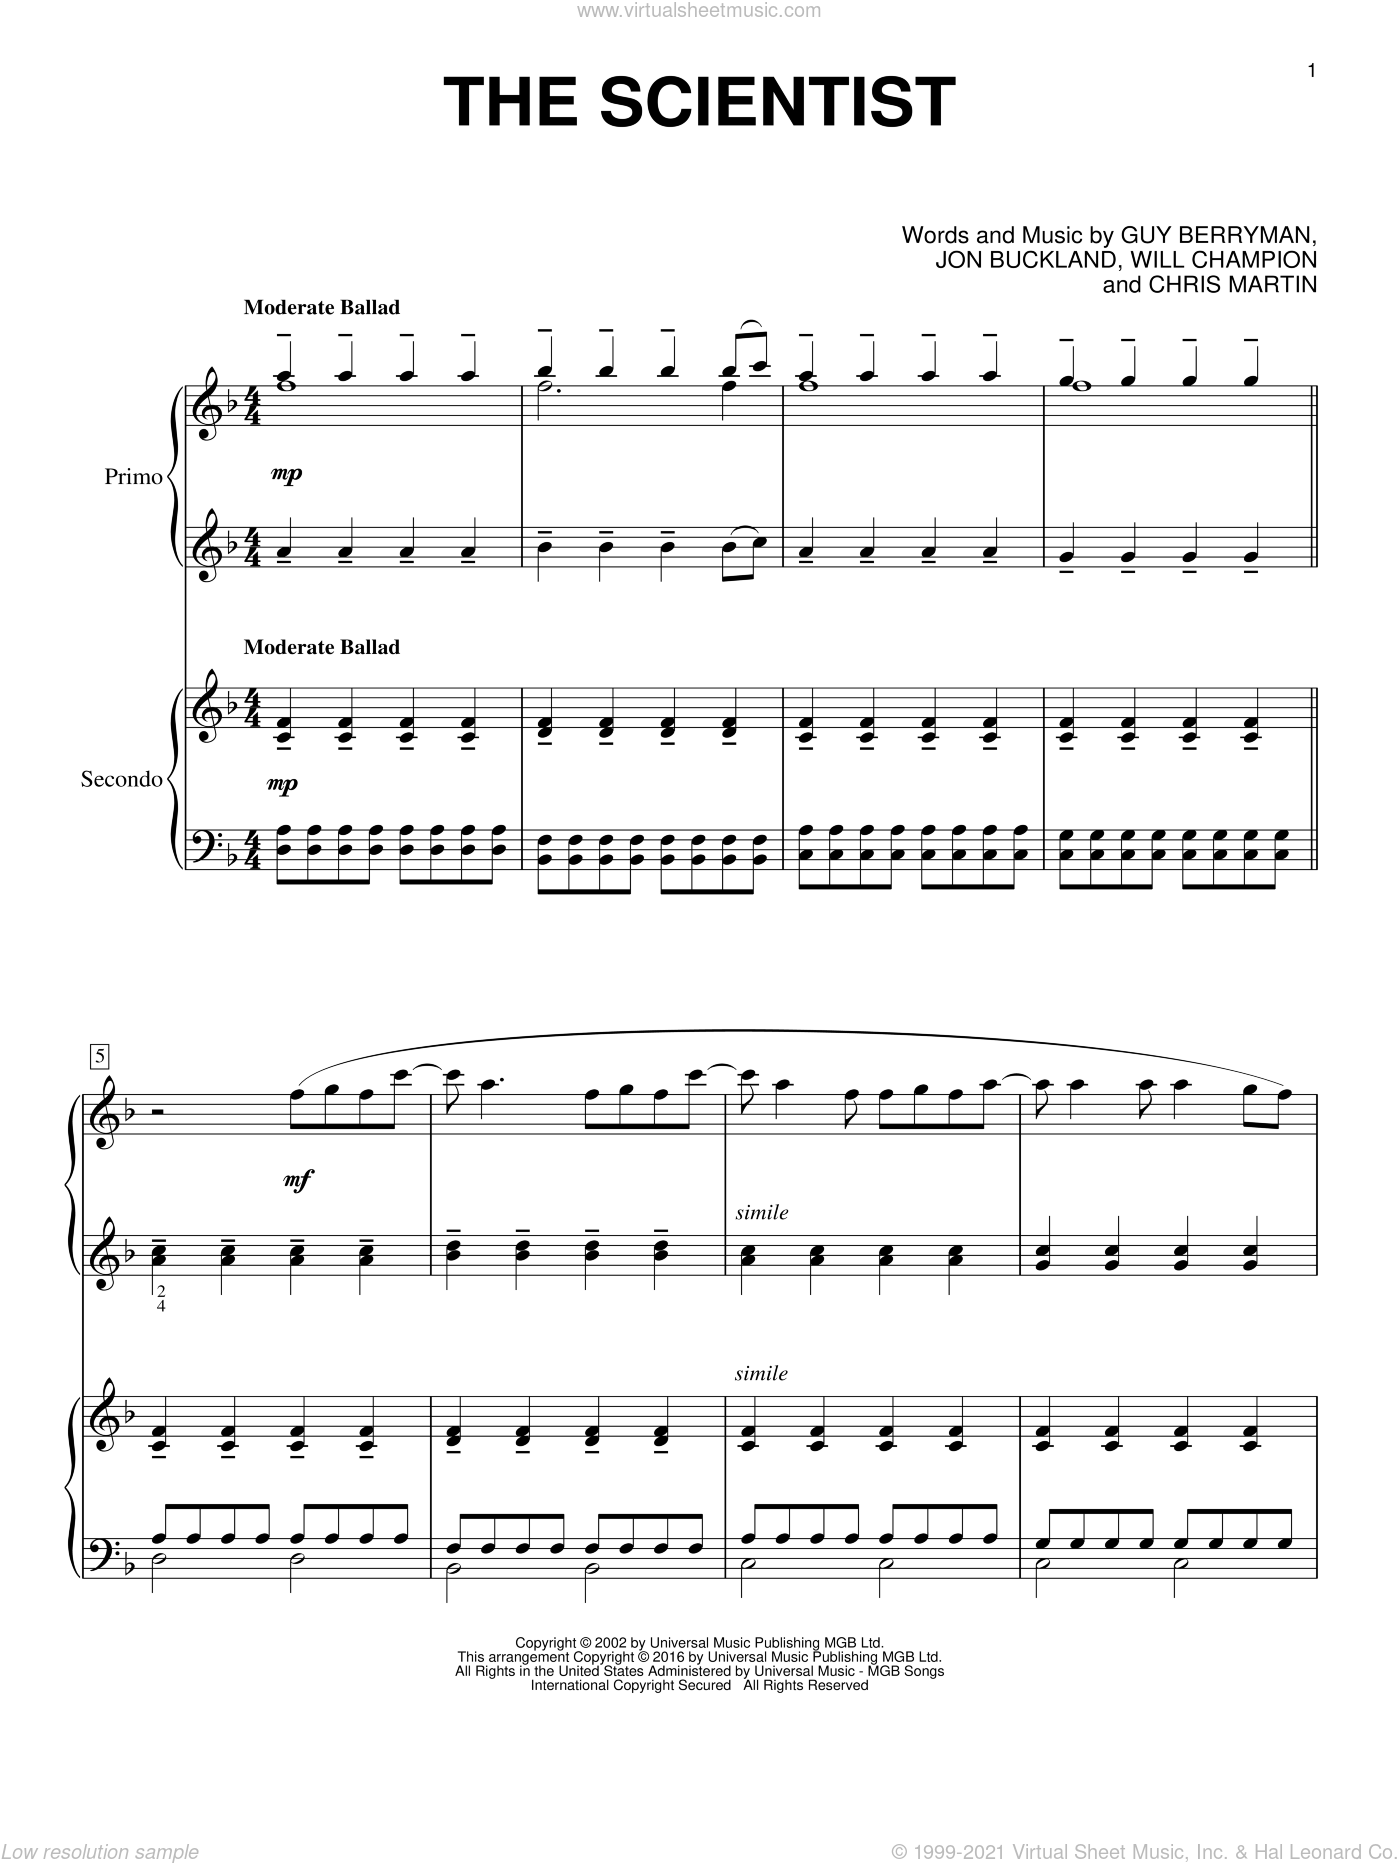 classical sheet music guitar Chords guitar paradise sheet coldplay solo
hl virtualsheetmusic